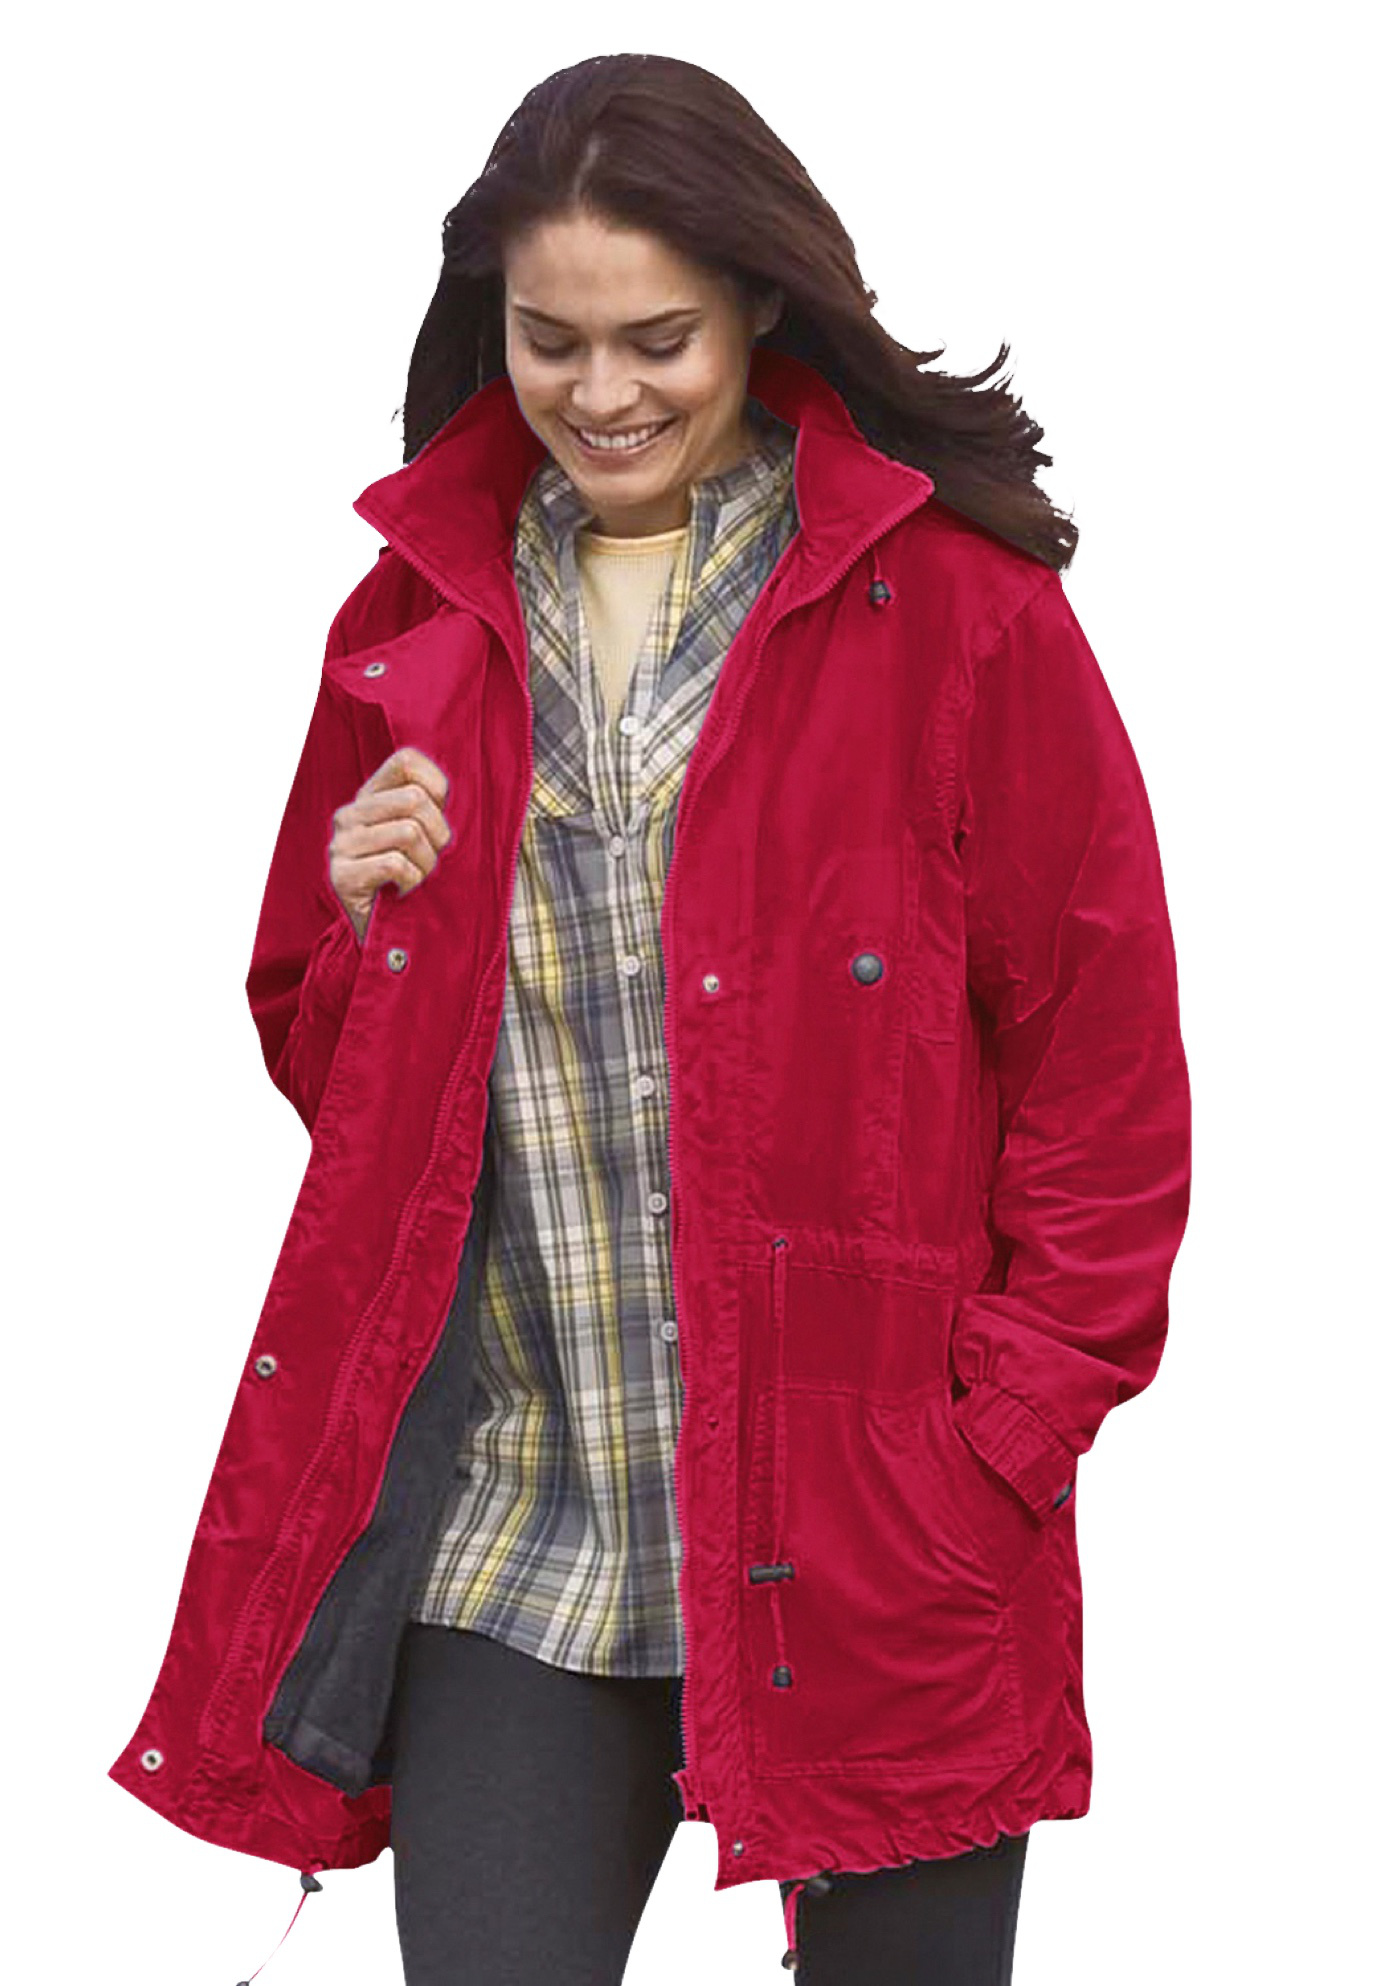 Woman Within Women's Plus Size Fleece-Lined Taslon Anorak Rain Jacket - image 1 of 6